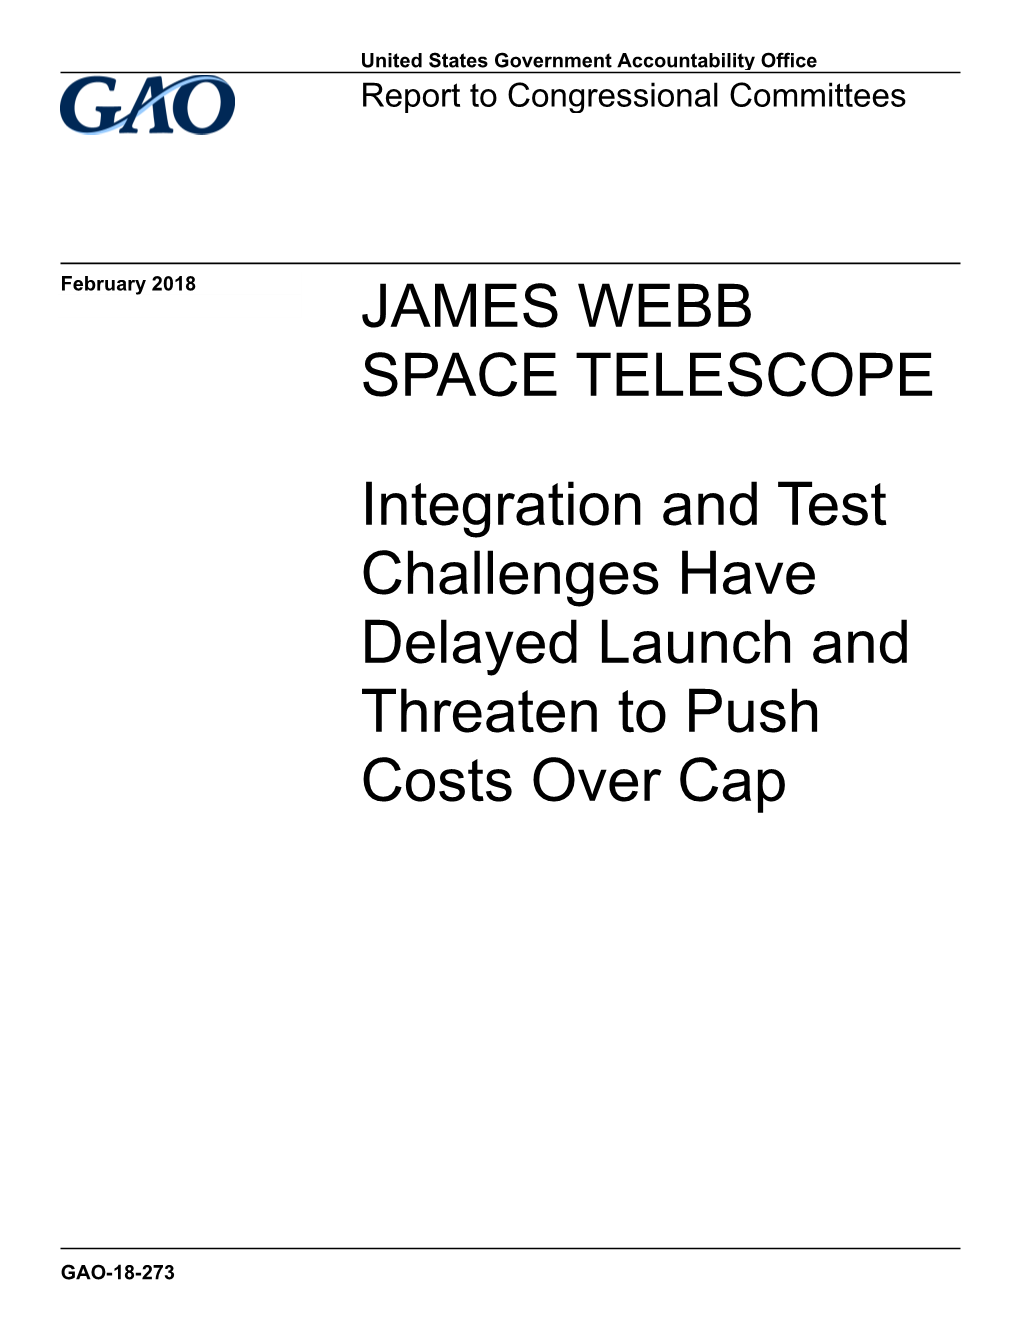 Gao-18-273, James Webb Space Telescope